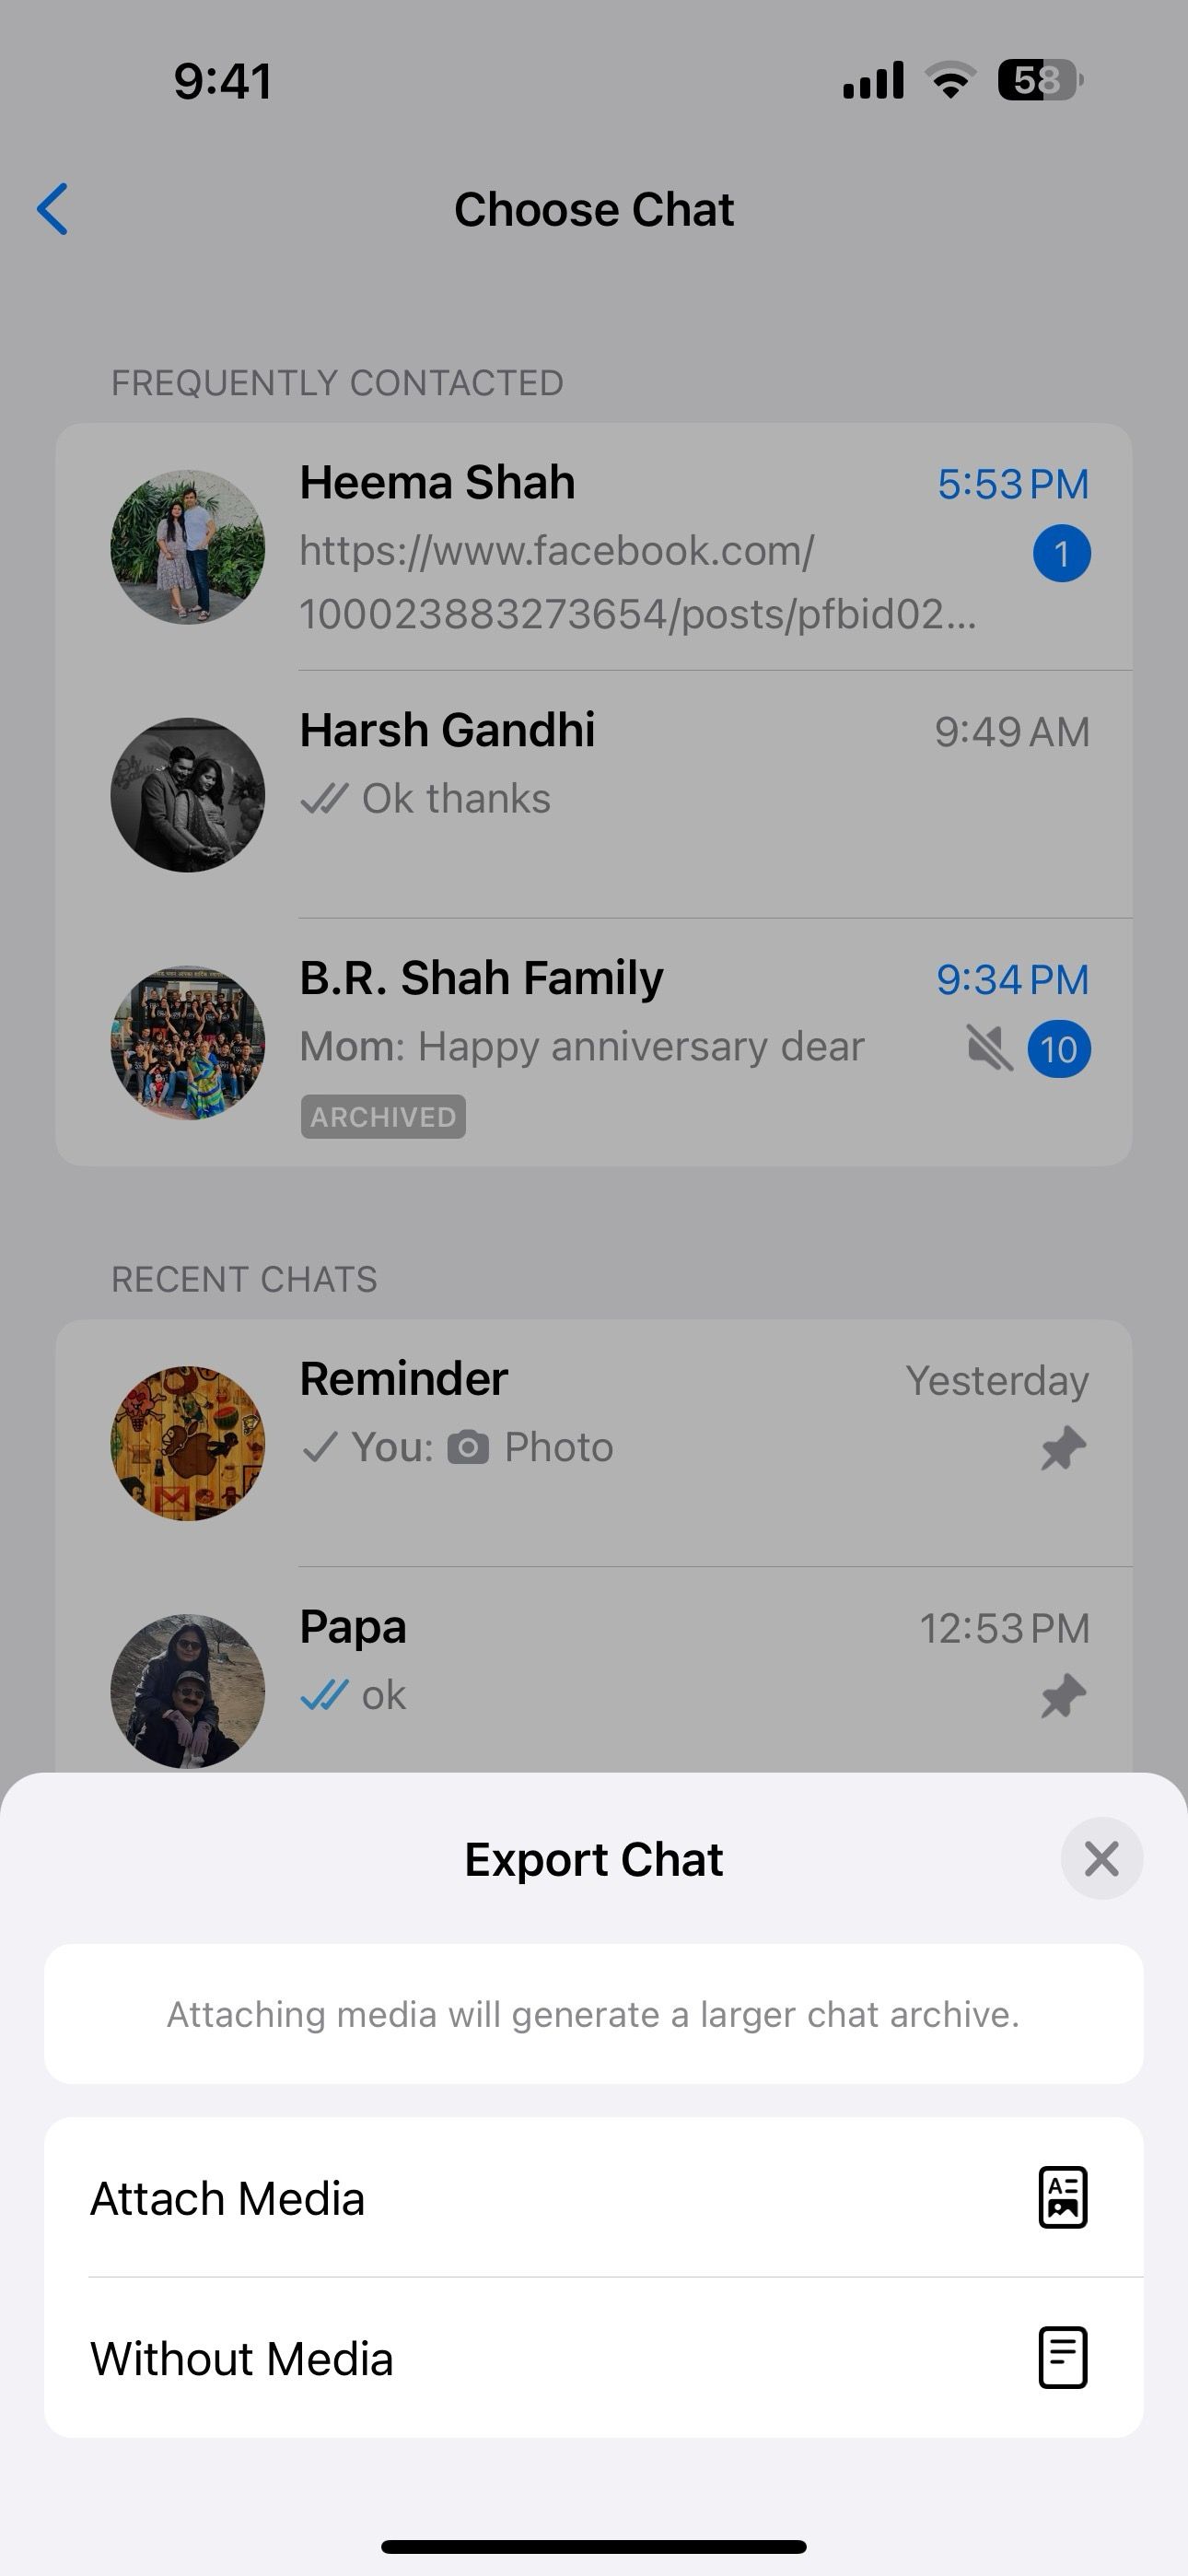 Exportar mensagens no WhatsApp para iPhone